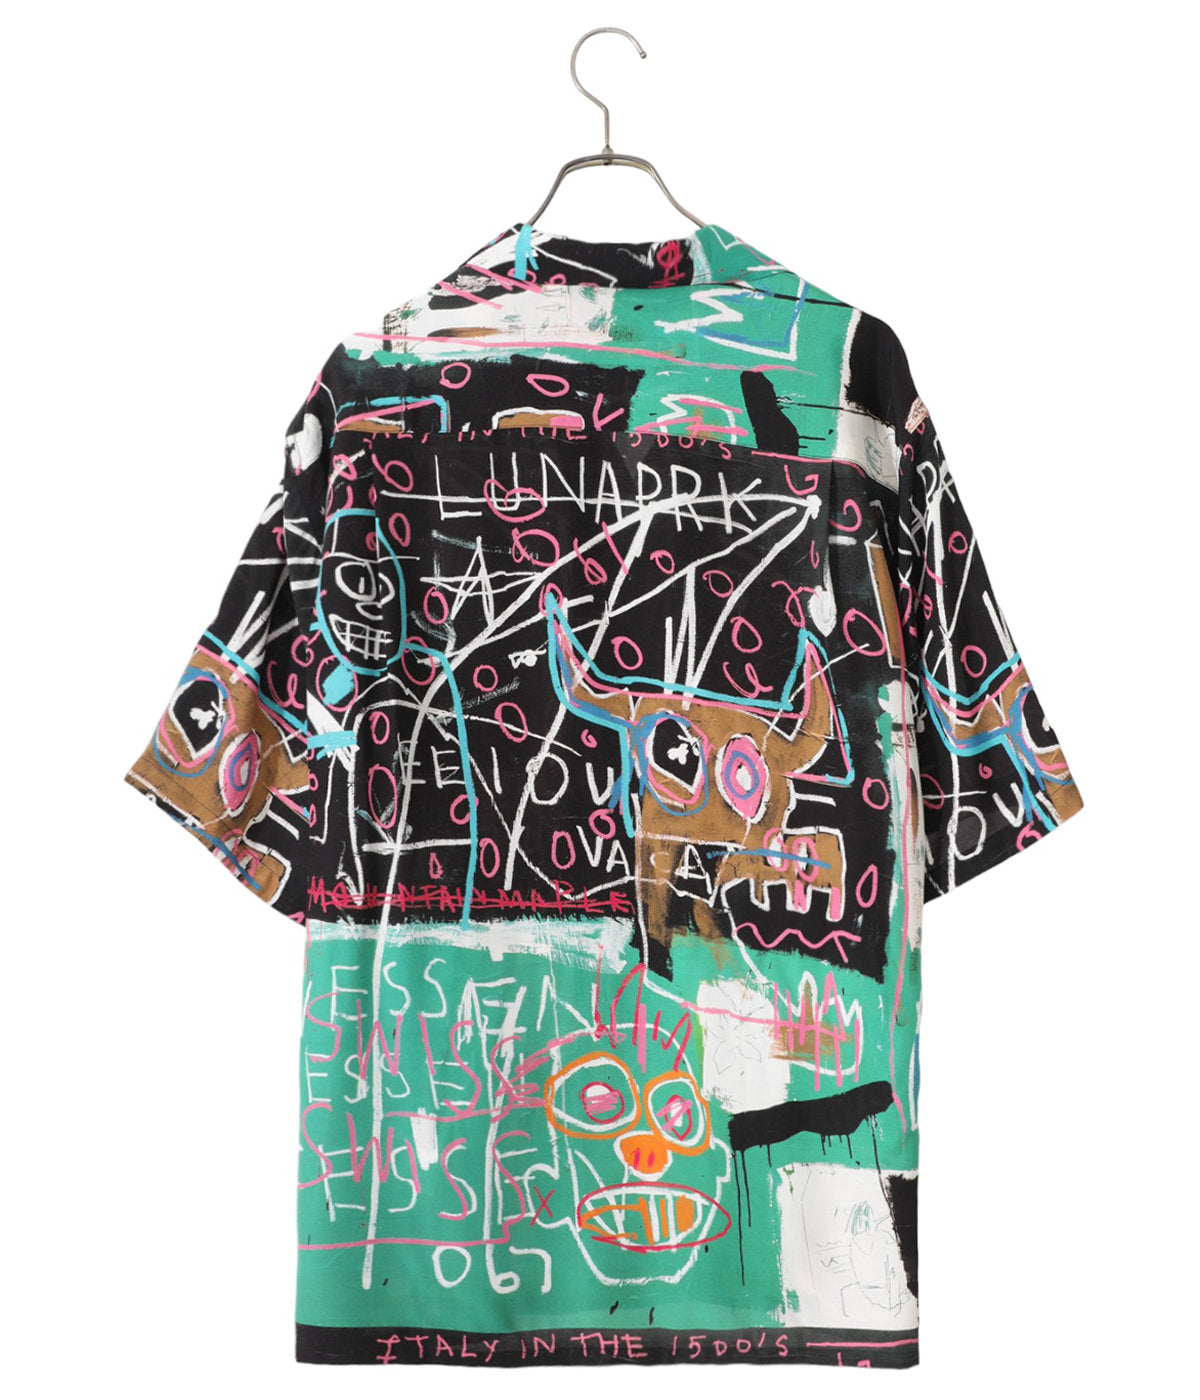 純正廉価 Wacko Maria Jean Michel Basquiat Shirt | artfive.co.jp